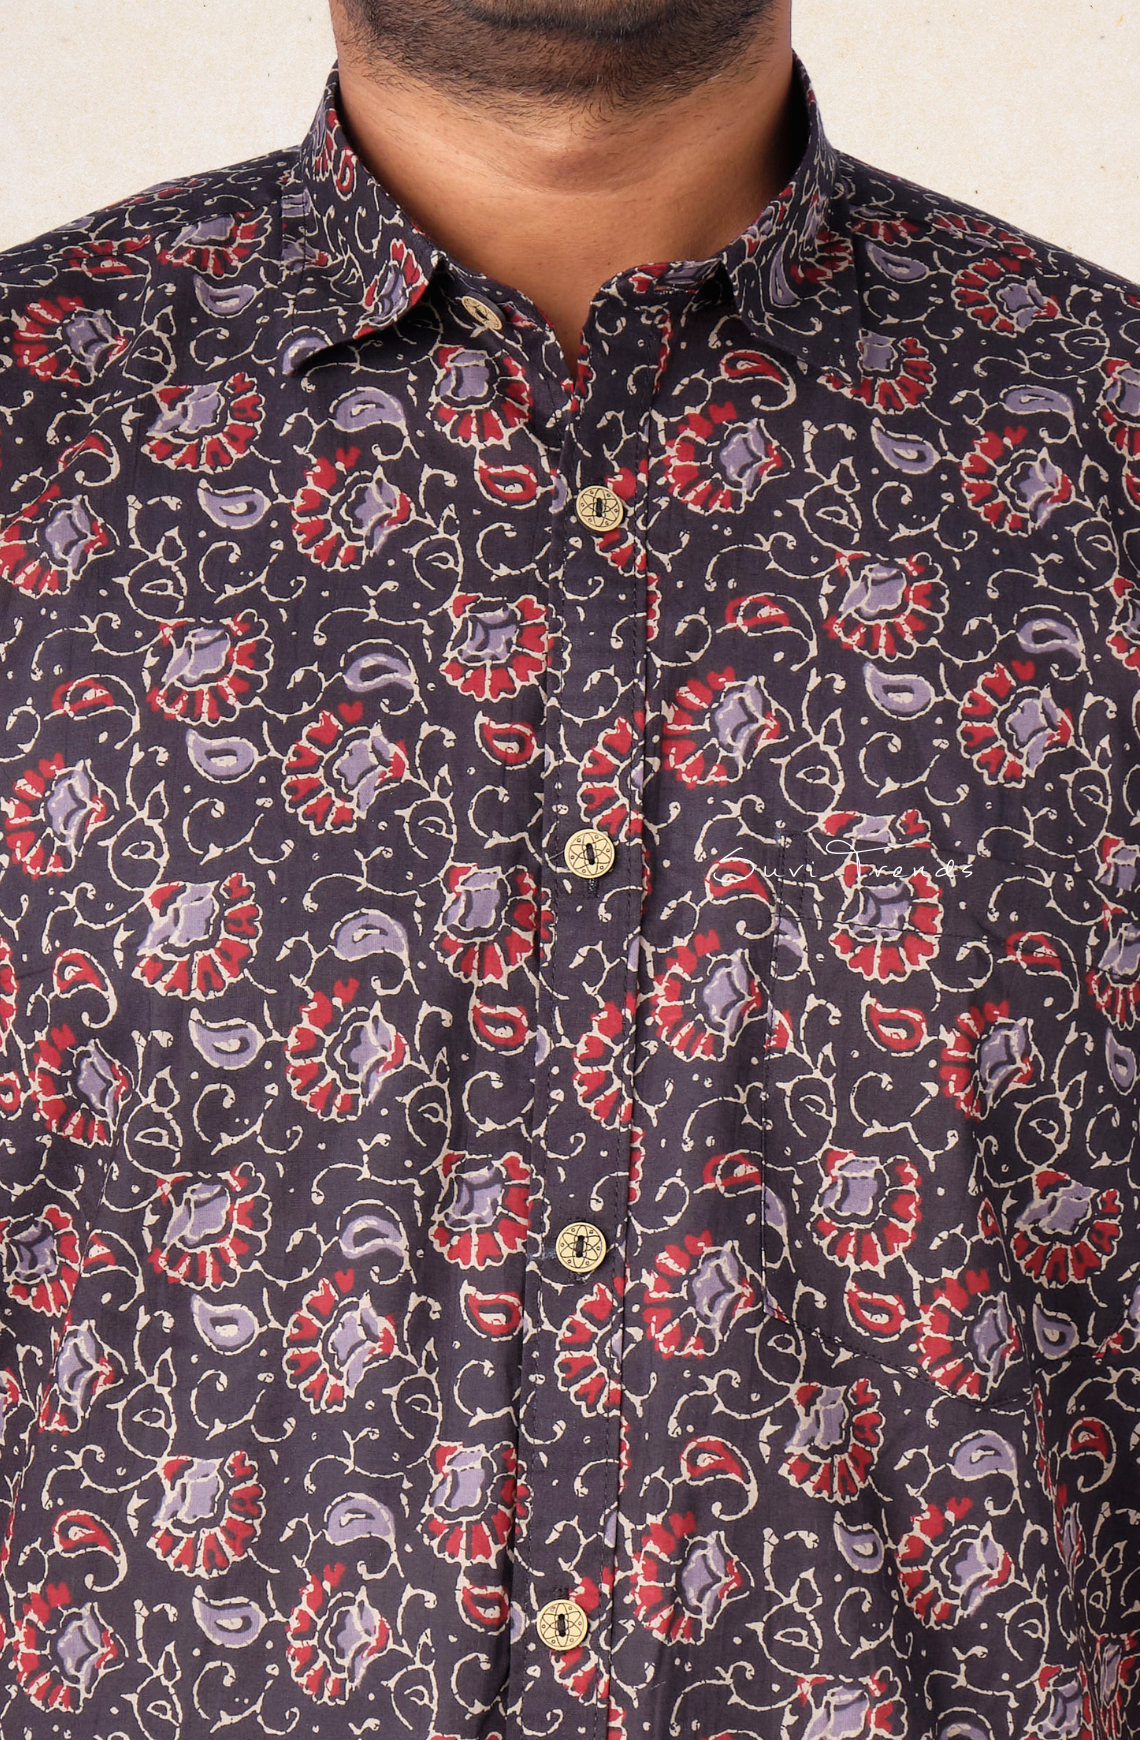 Men's Floral Printed Cotton Shirt - Black & Red